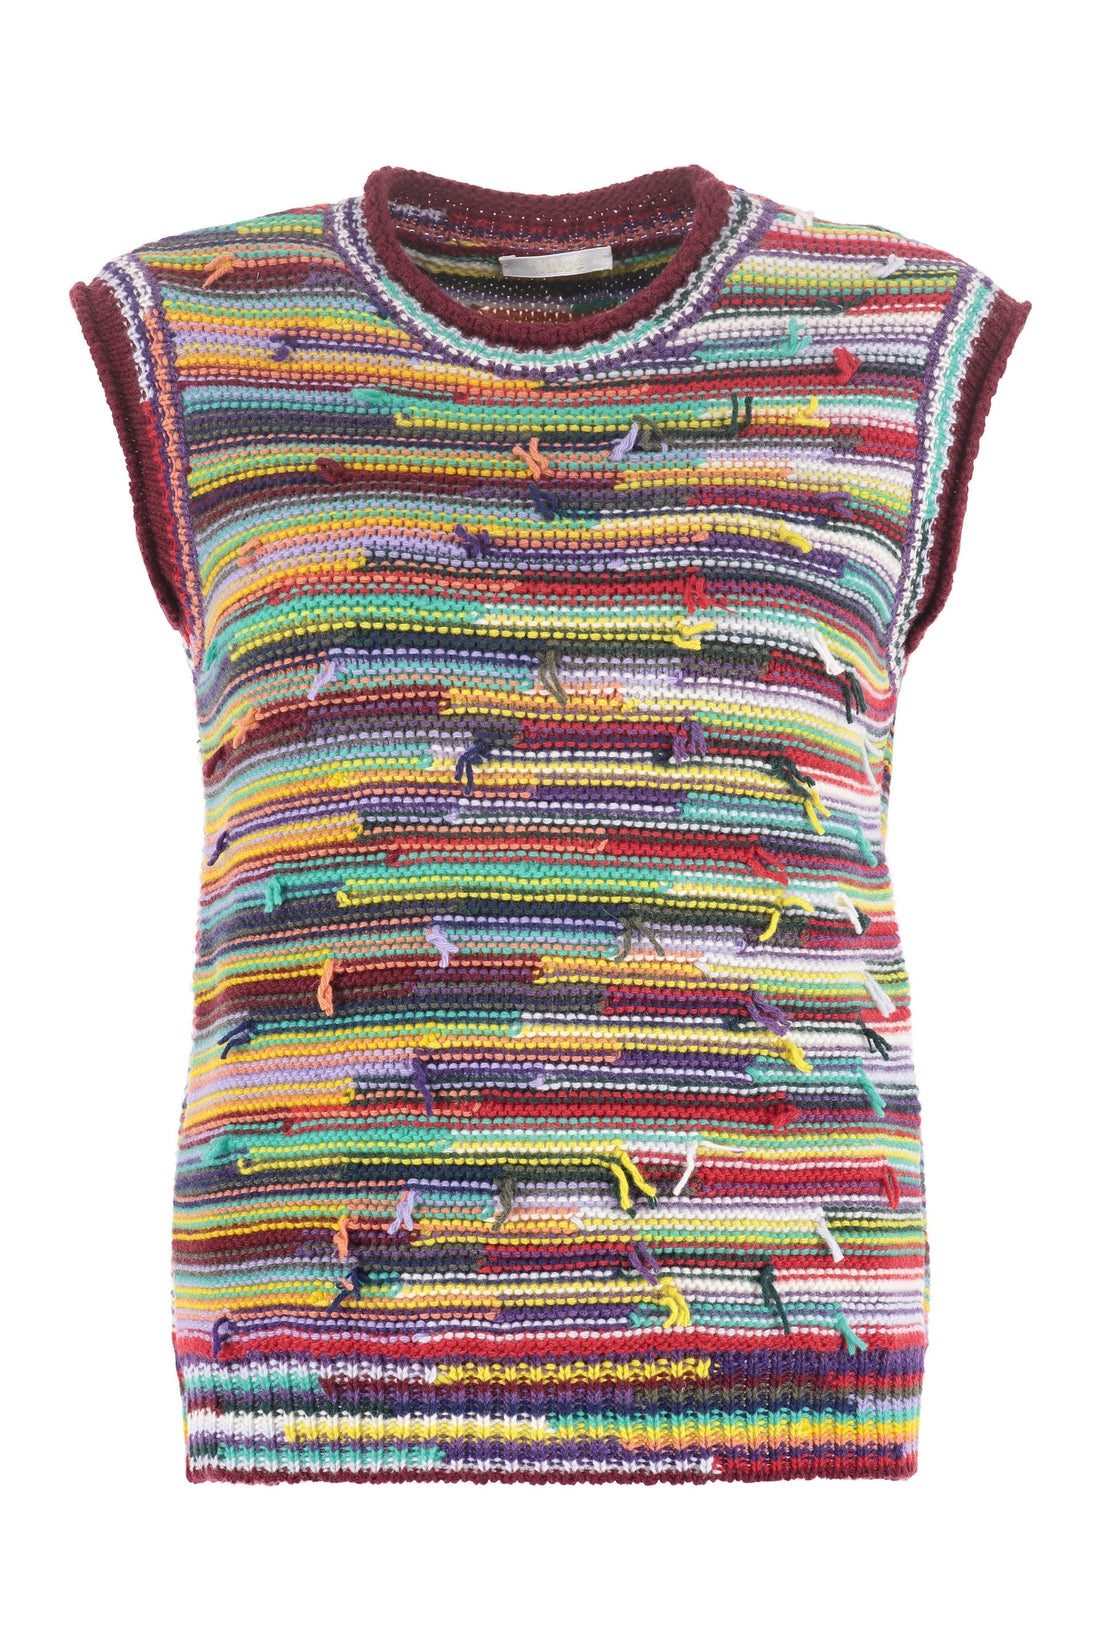 Chloé-OUTLET-SALE-Cashmere-wool blend knitted vest-ARCHIVIST